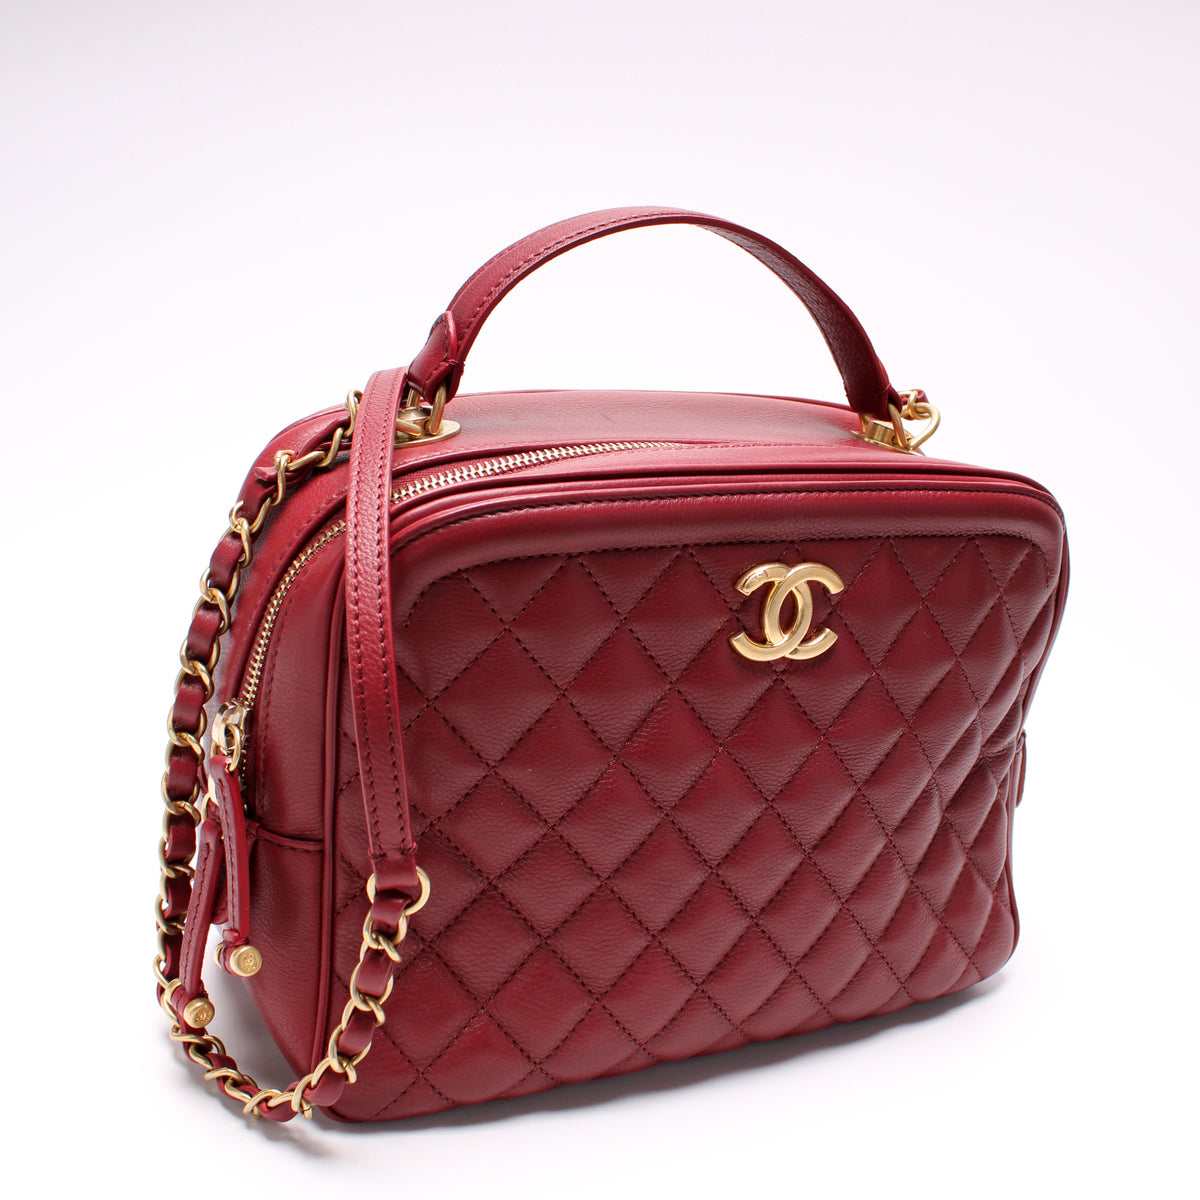 Chanel cosmetic vanity bag small